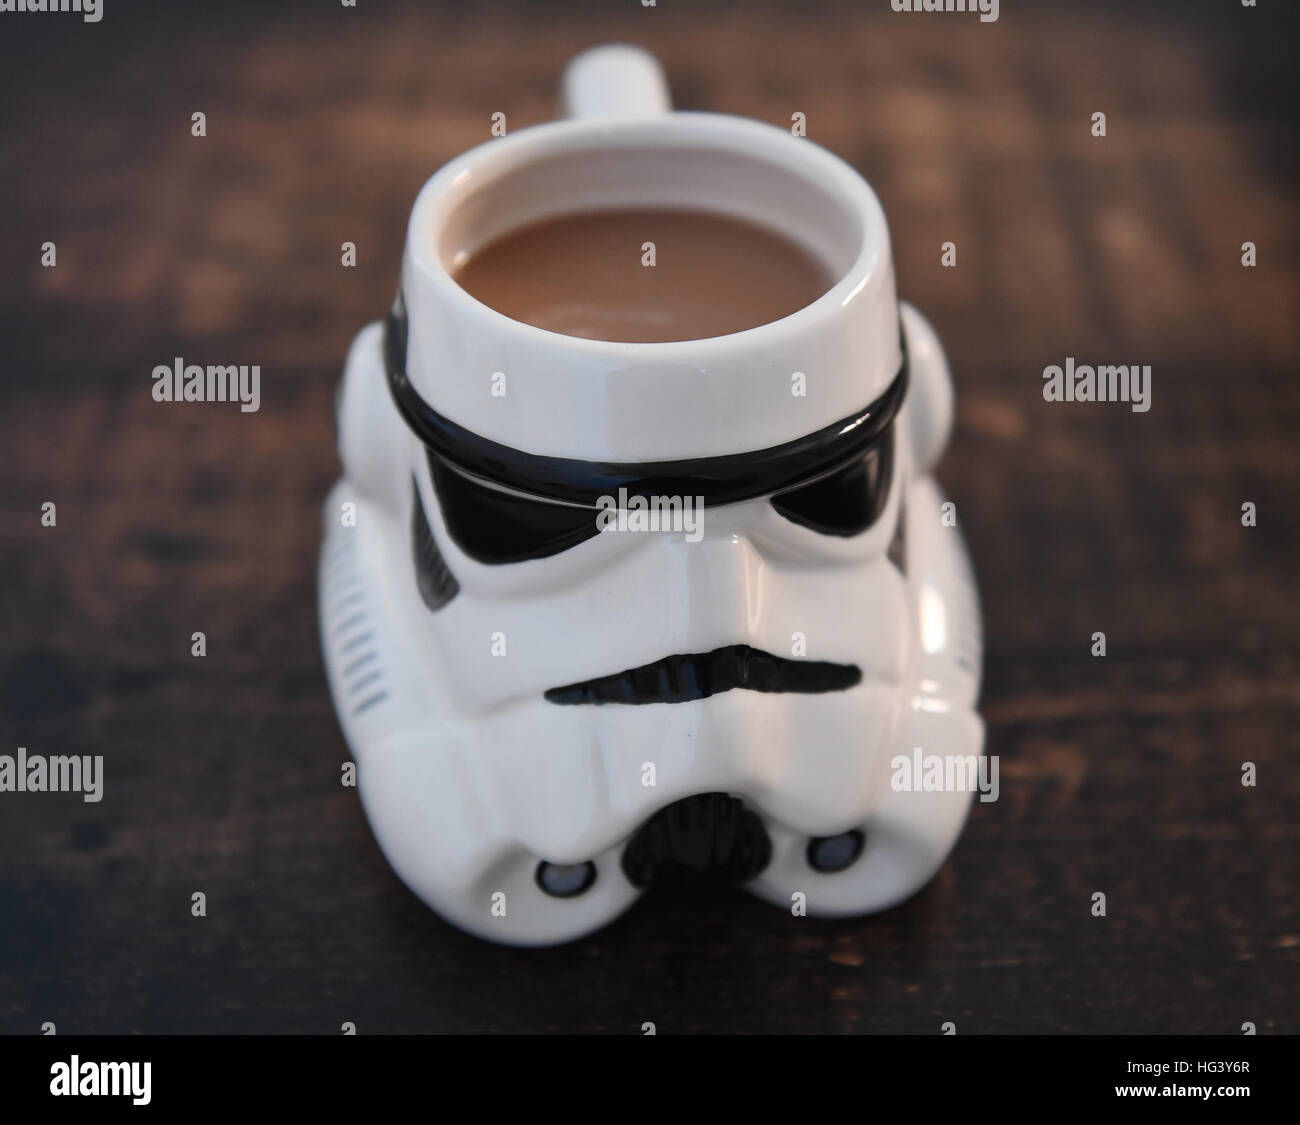 Storm trooper helmet mug filled with tea on a dark wooden table. Stock Photo